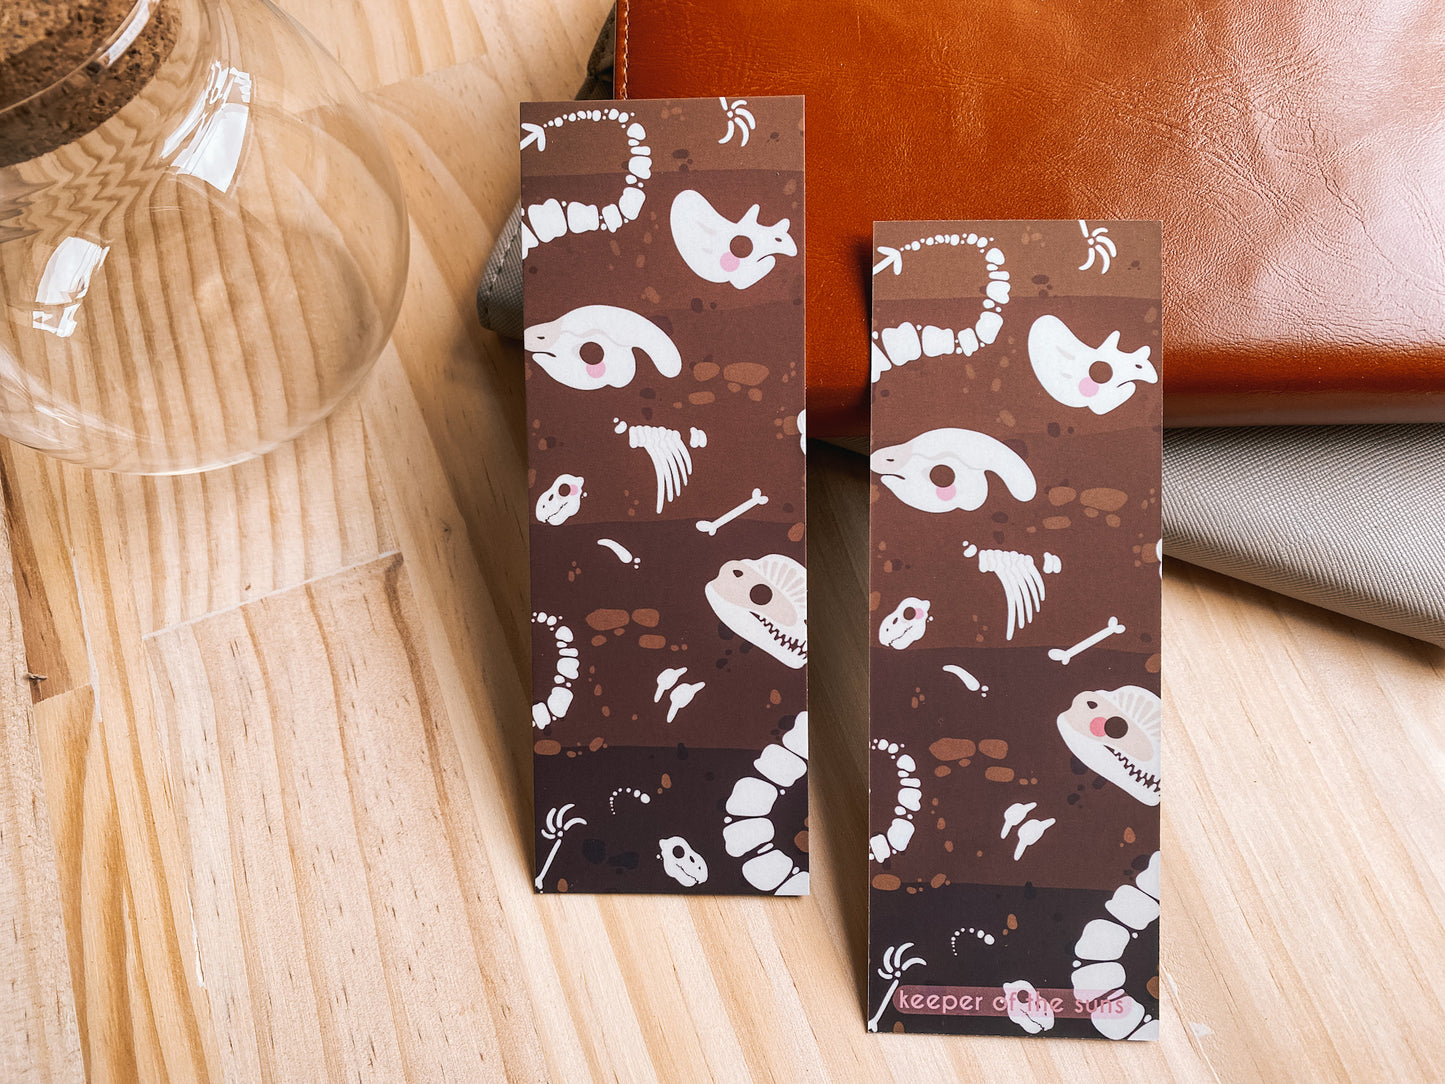 Dino Bones Bookmark | 400gsm Silky Smooth Velvet-Finish Bookmark